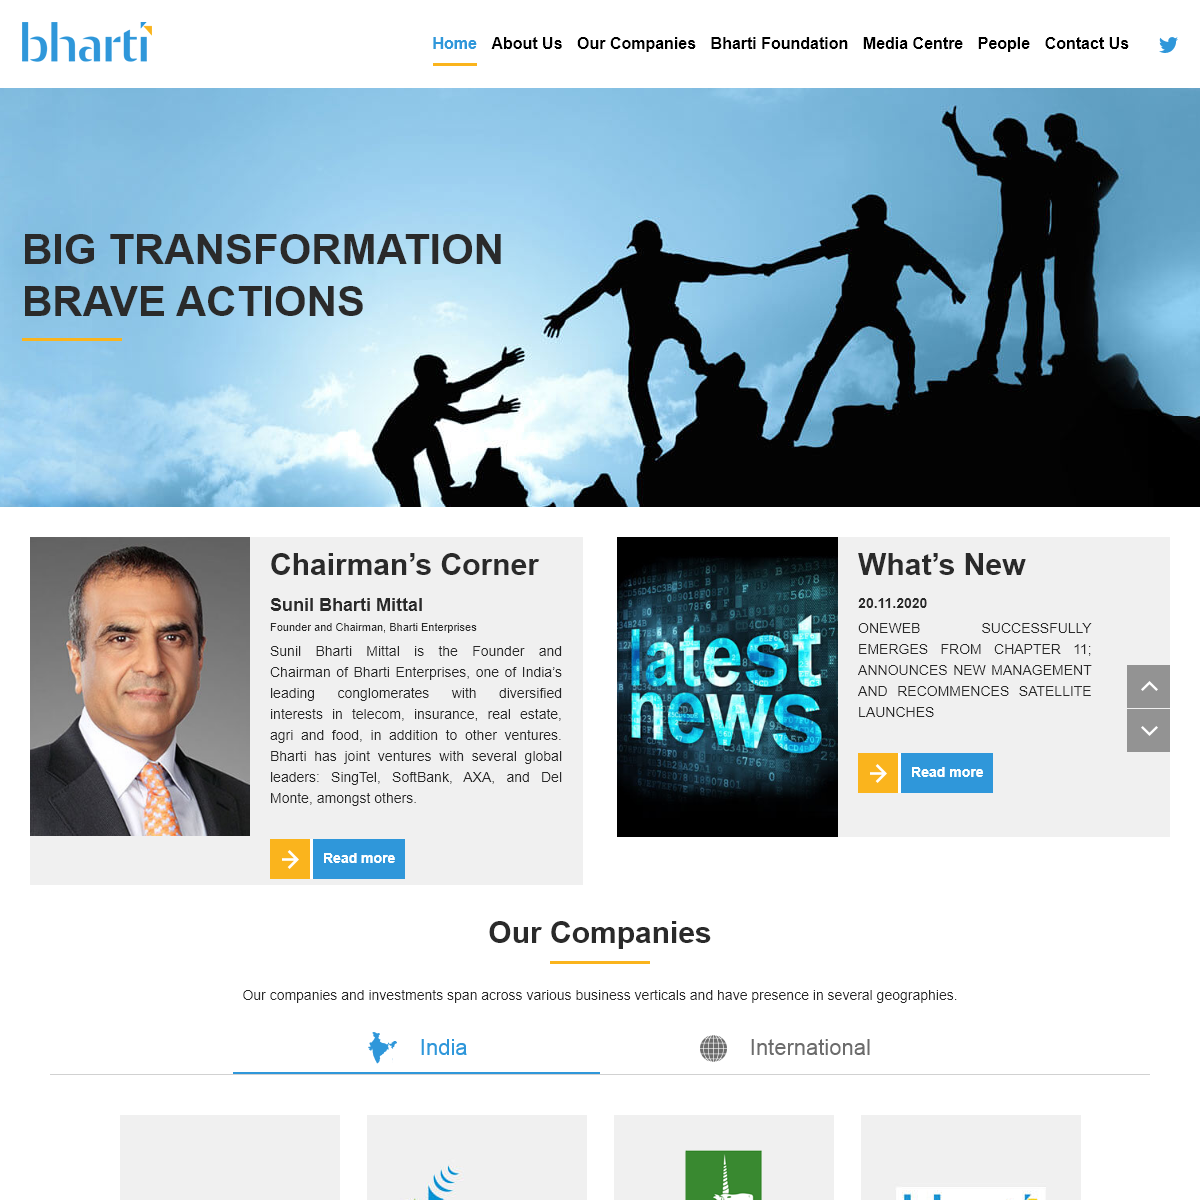 A complete backup of bharti.com